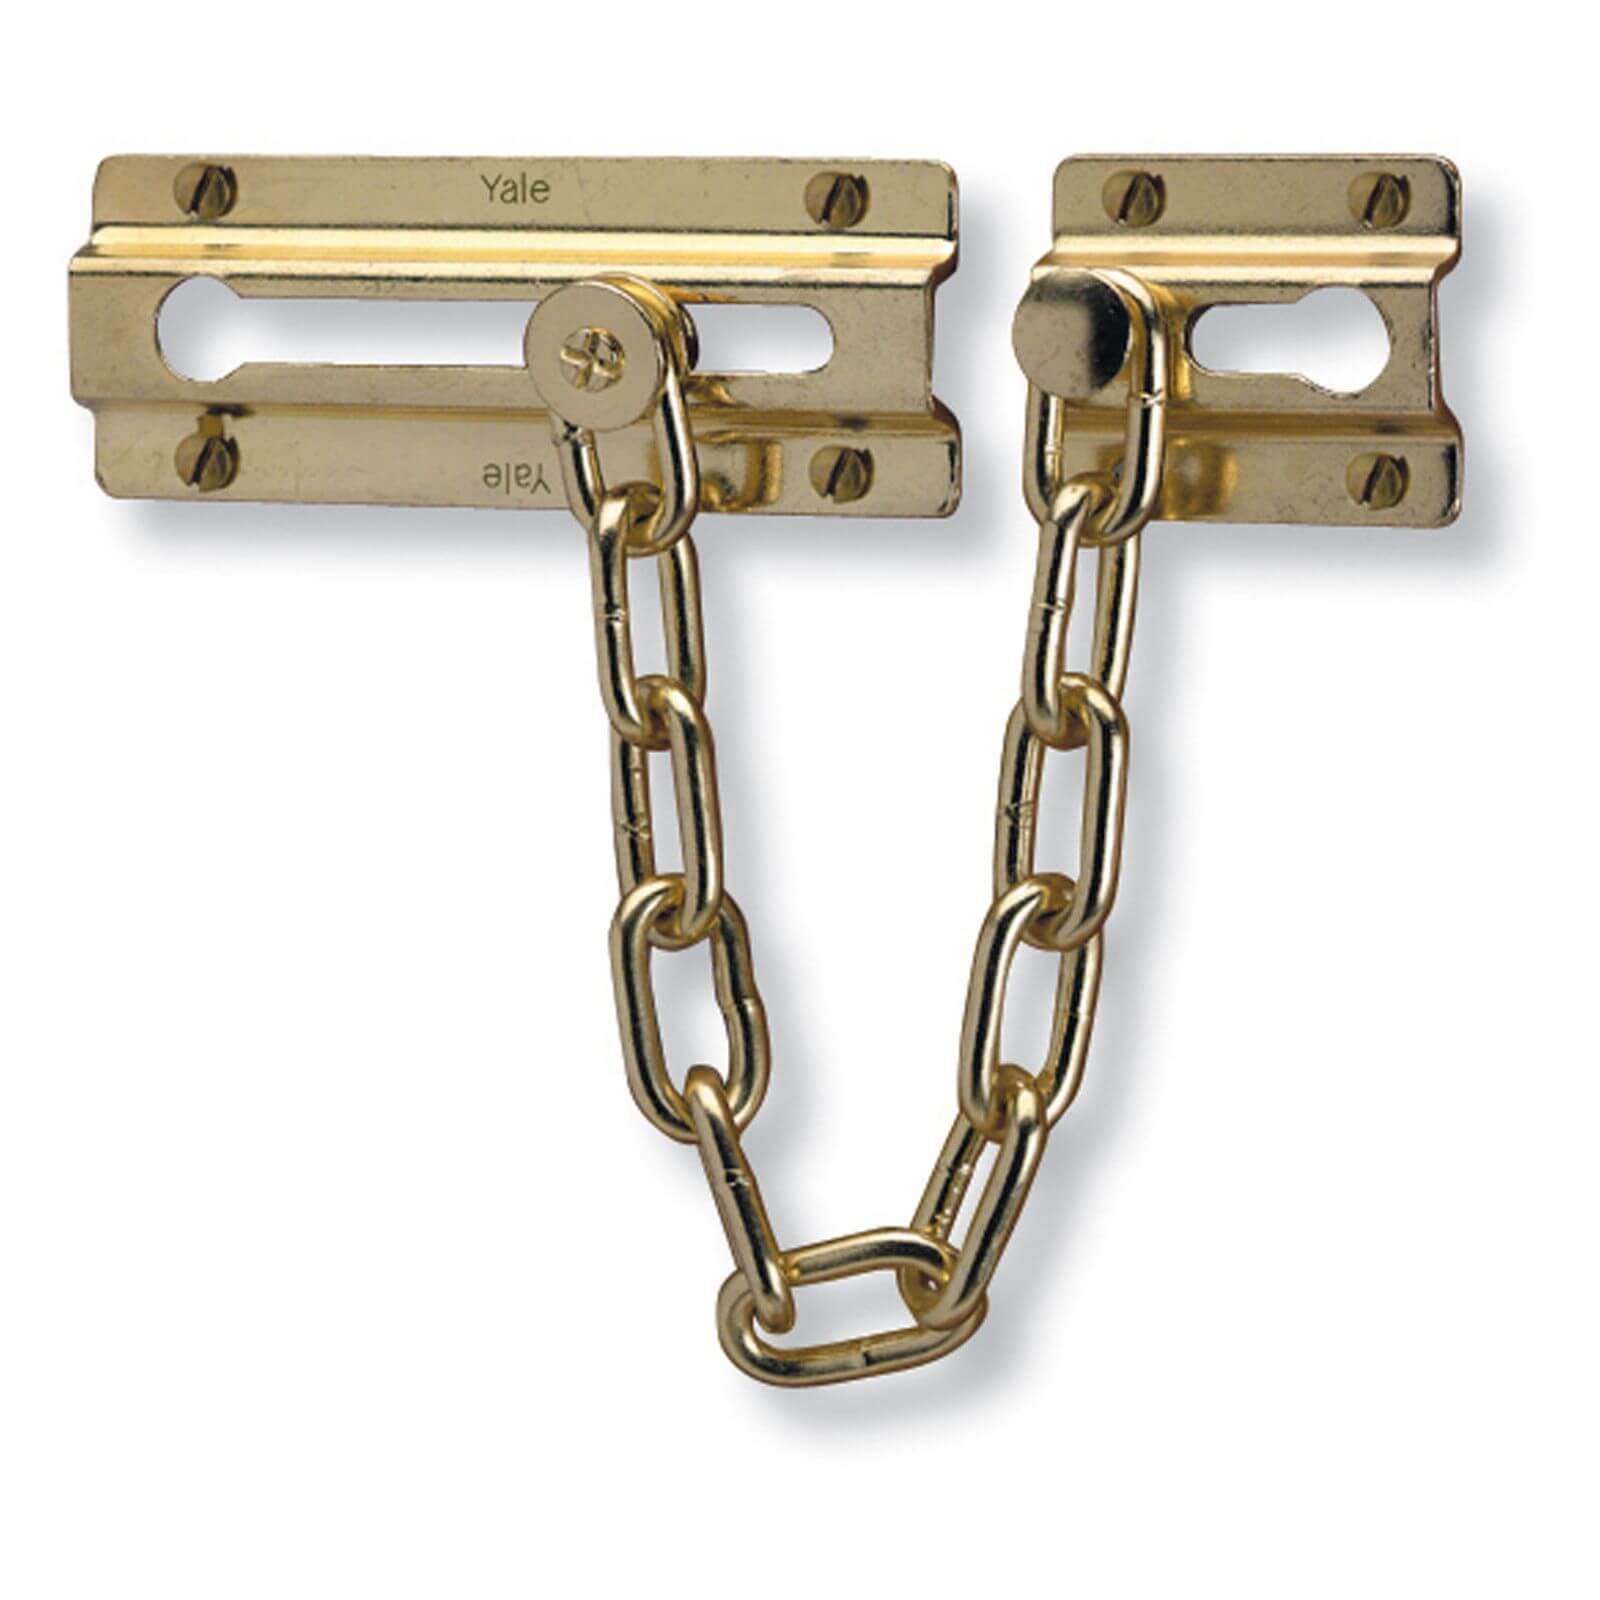 Photo of Yale Door Chain - Brass